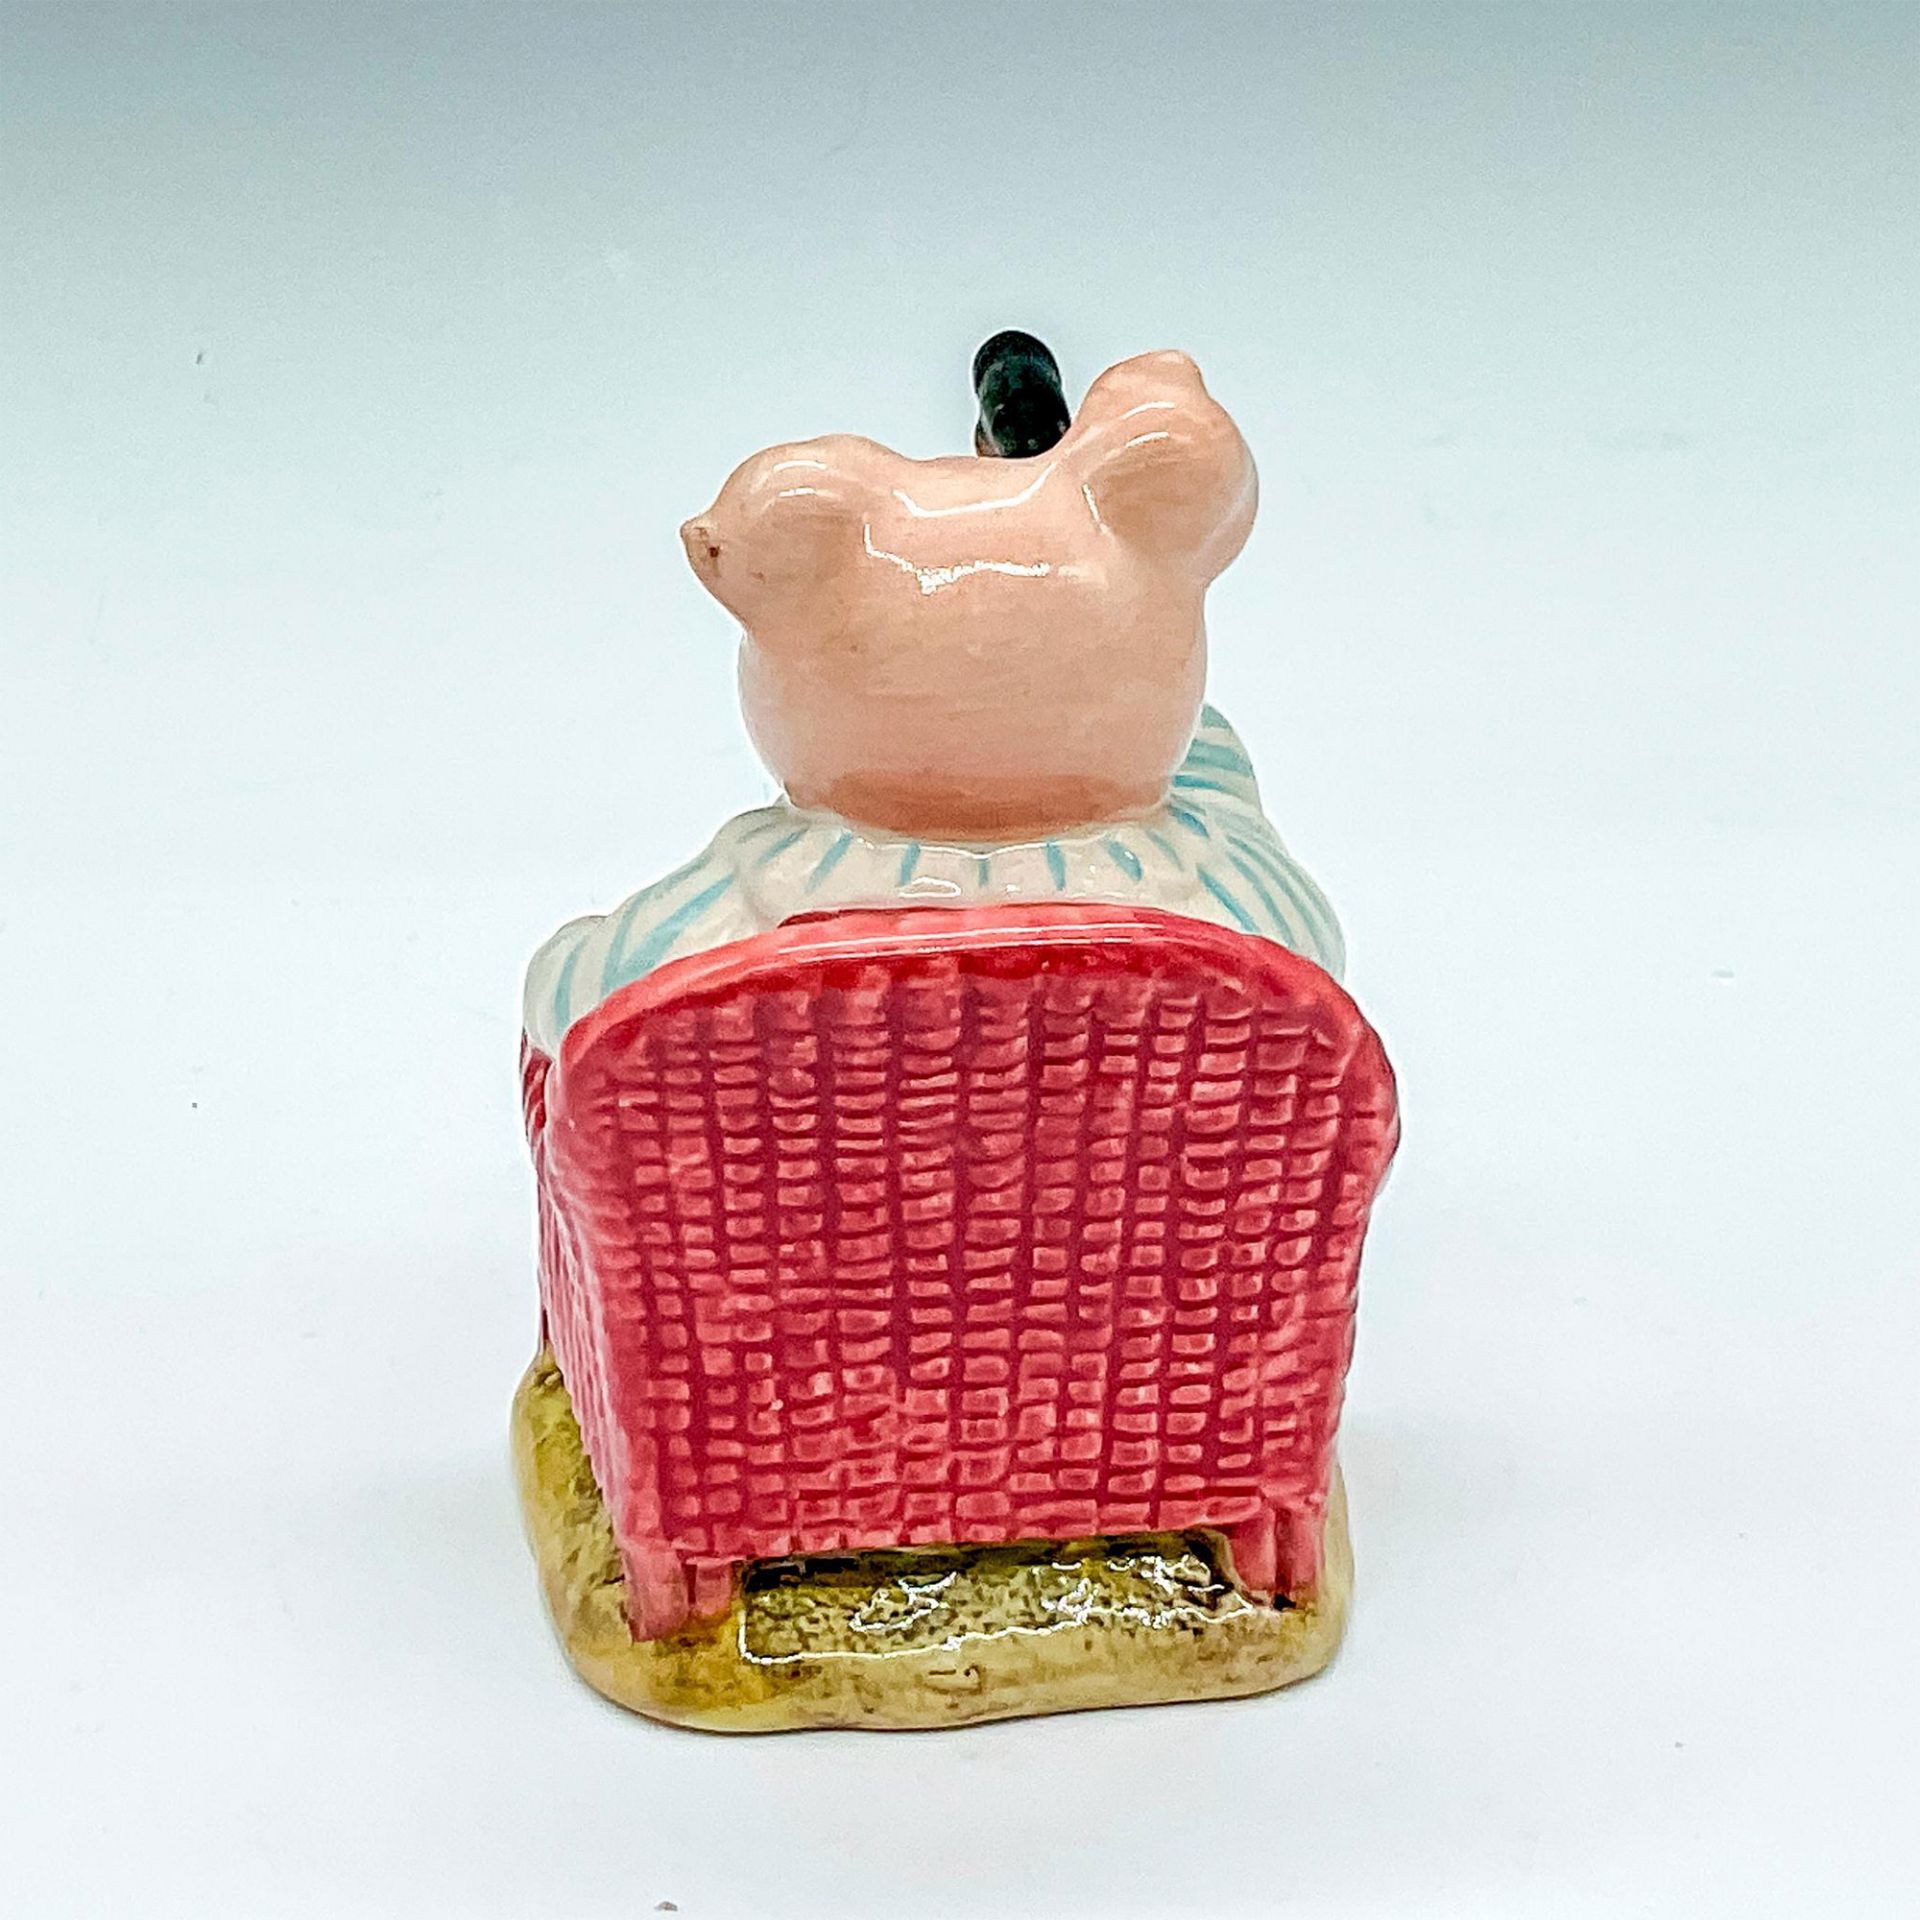 Royal Albert Beatrix Potter Figurine, Little Pig Robinson - Image 2 of 3